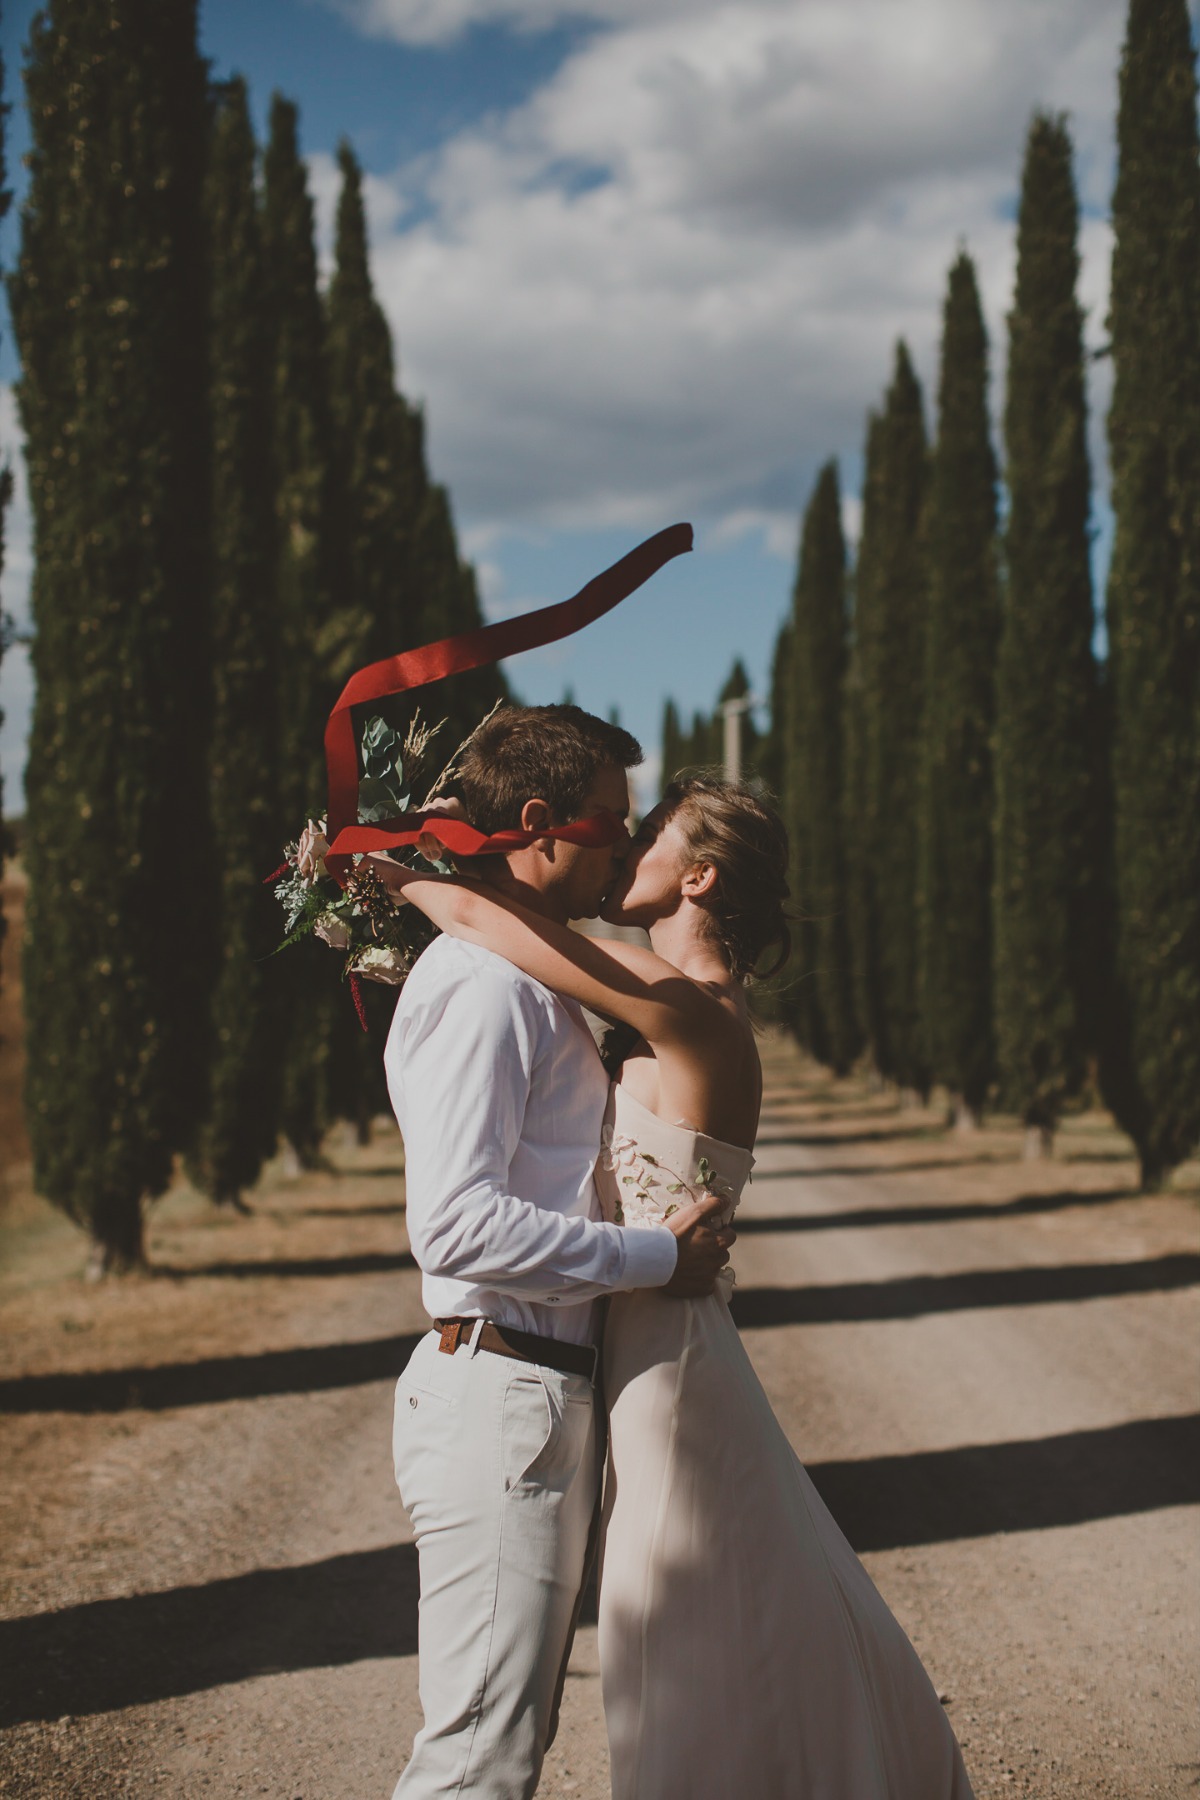 Destination wedding idea- Tuscany